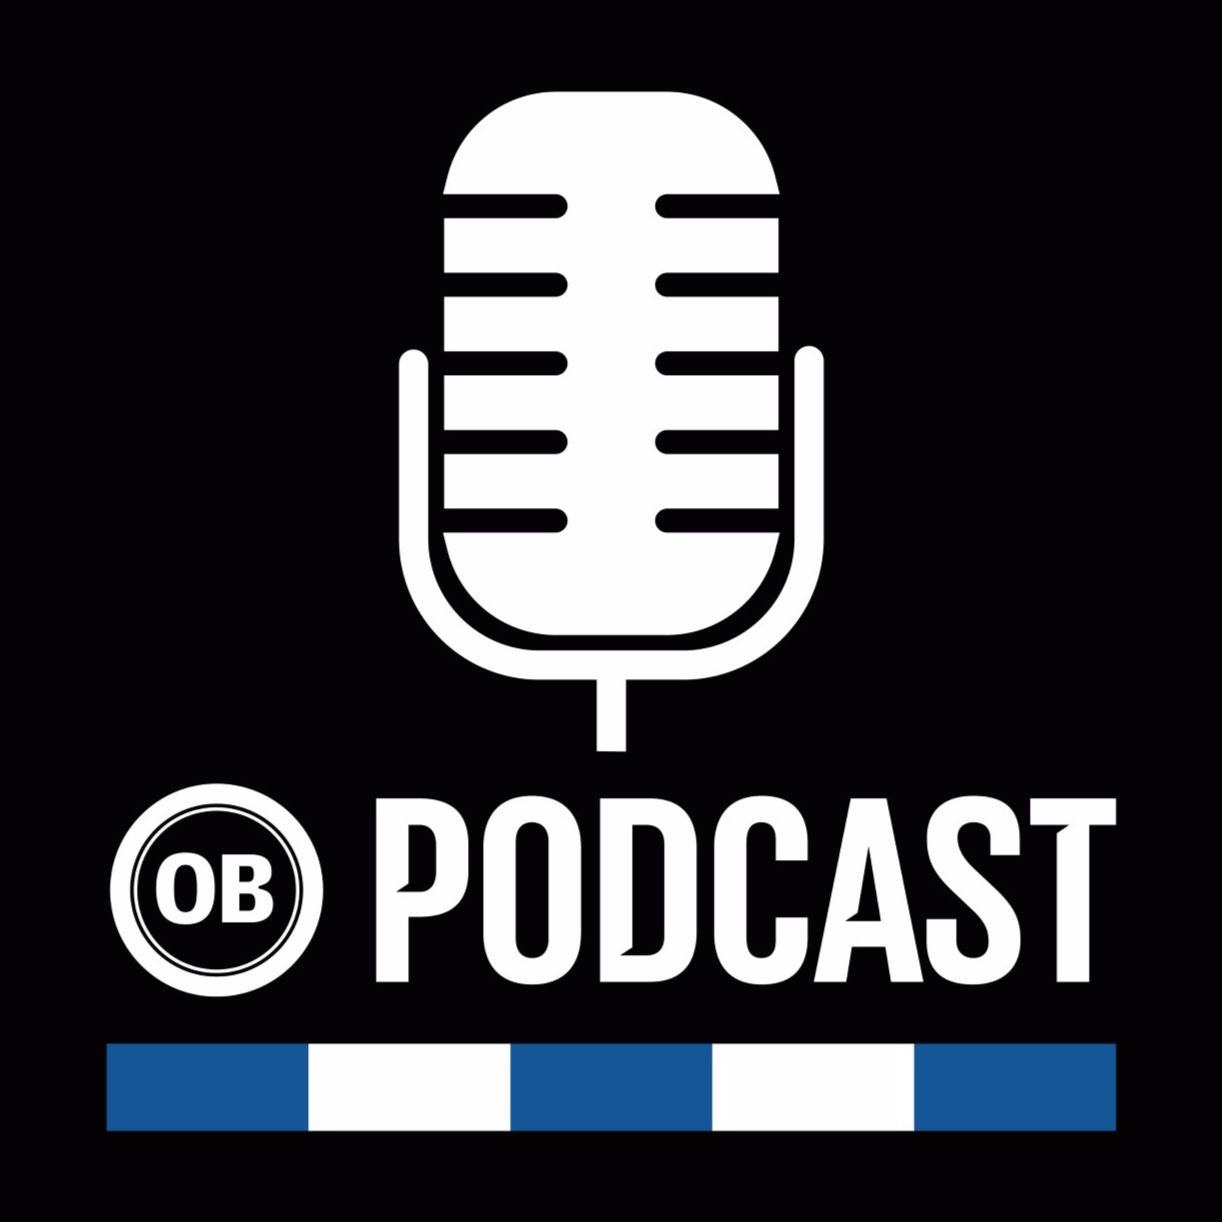 OB Podcast